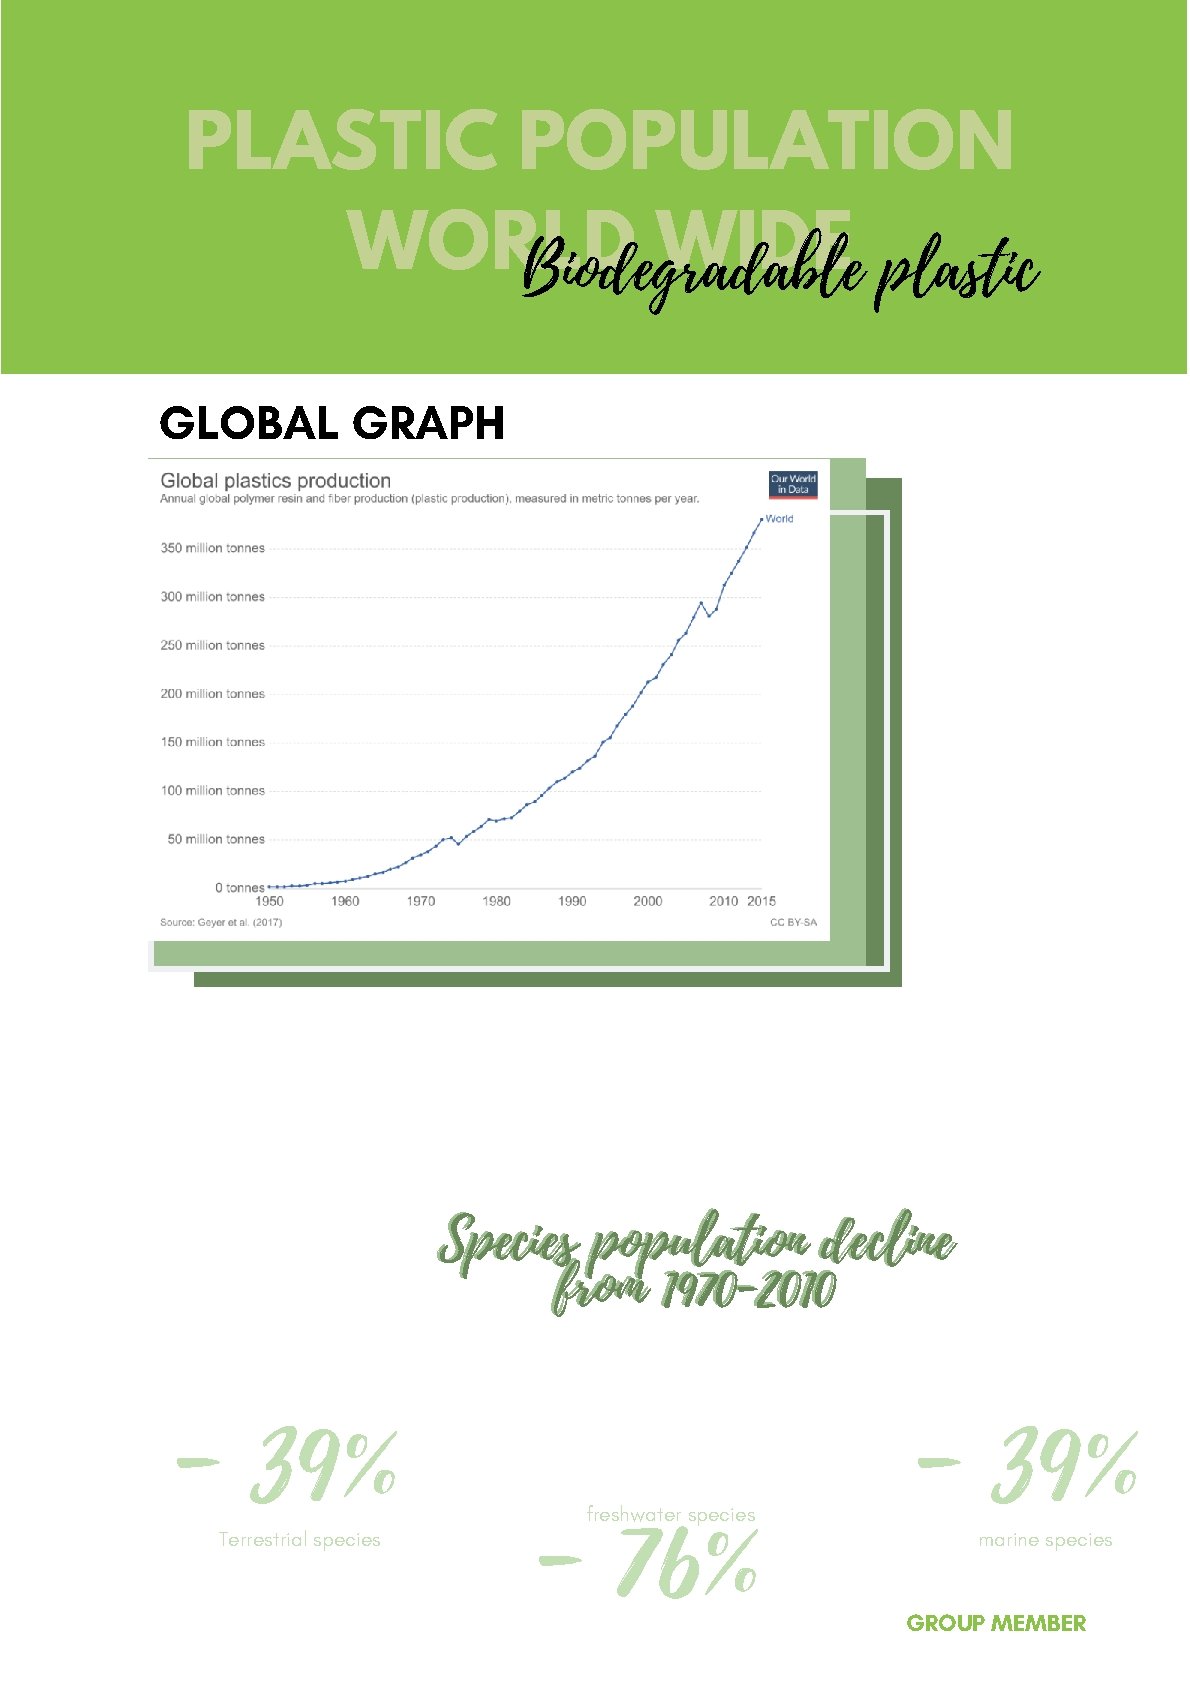 PLASTIC POPULATION WORLD WIDE Biodegradable plastic GLOBAL GRAPH Species population decline from 1970 -2010